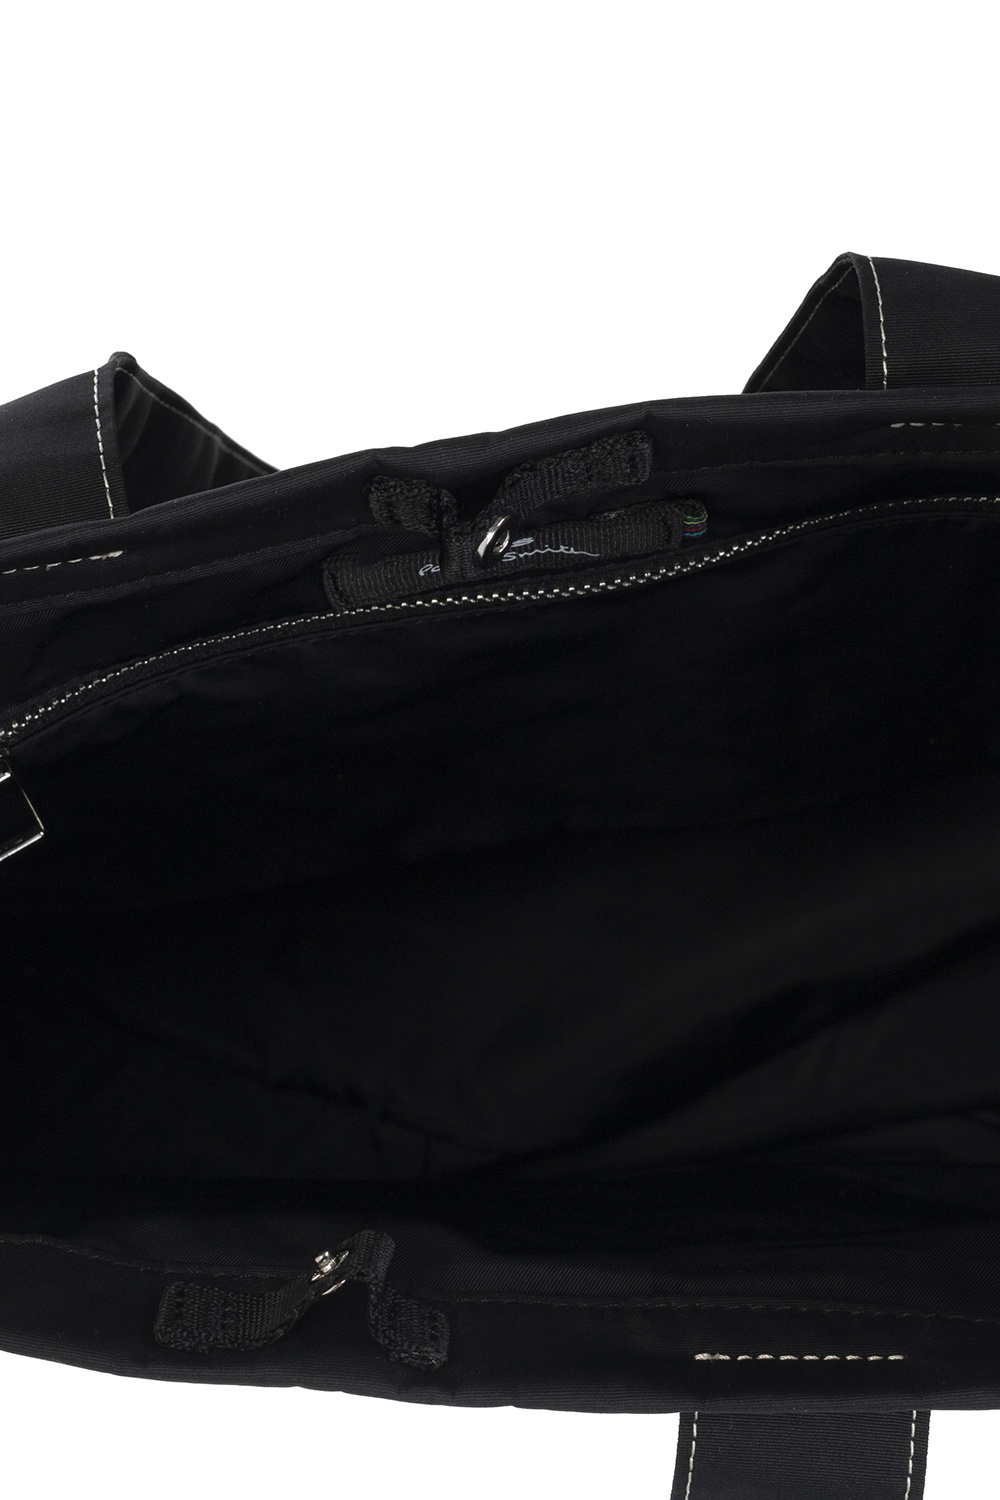 Prada logo-print shearling tote bag ‘Smile’ shopper bag